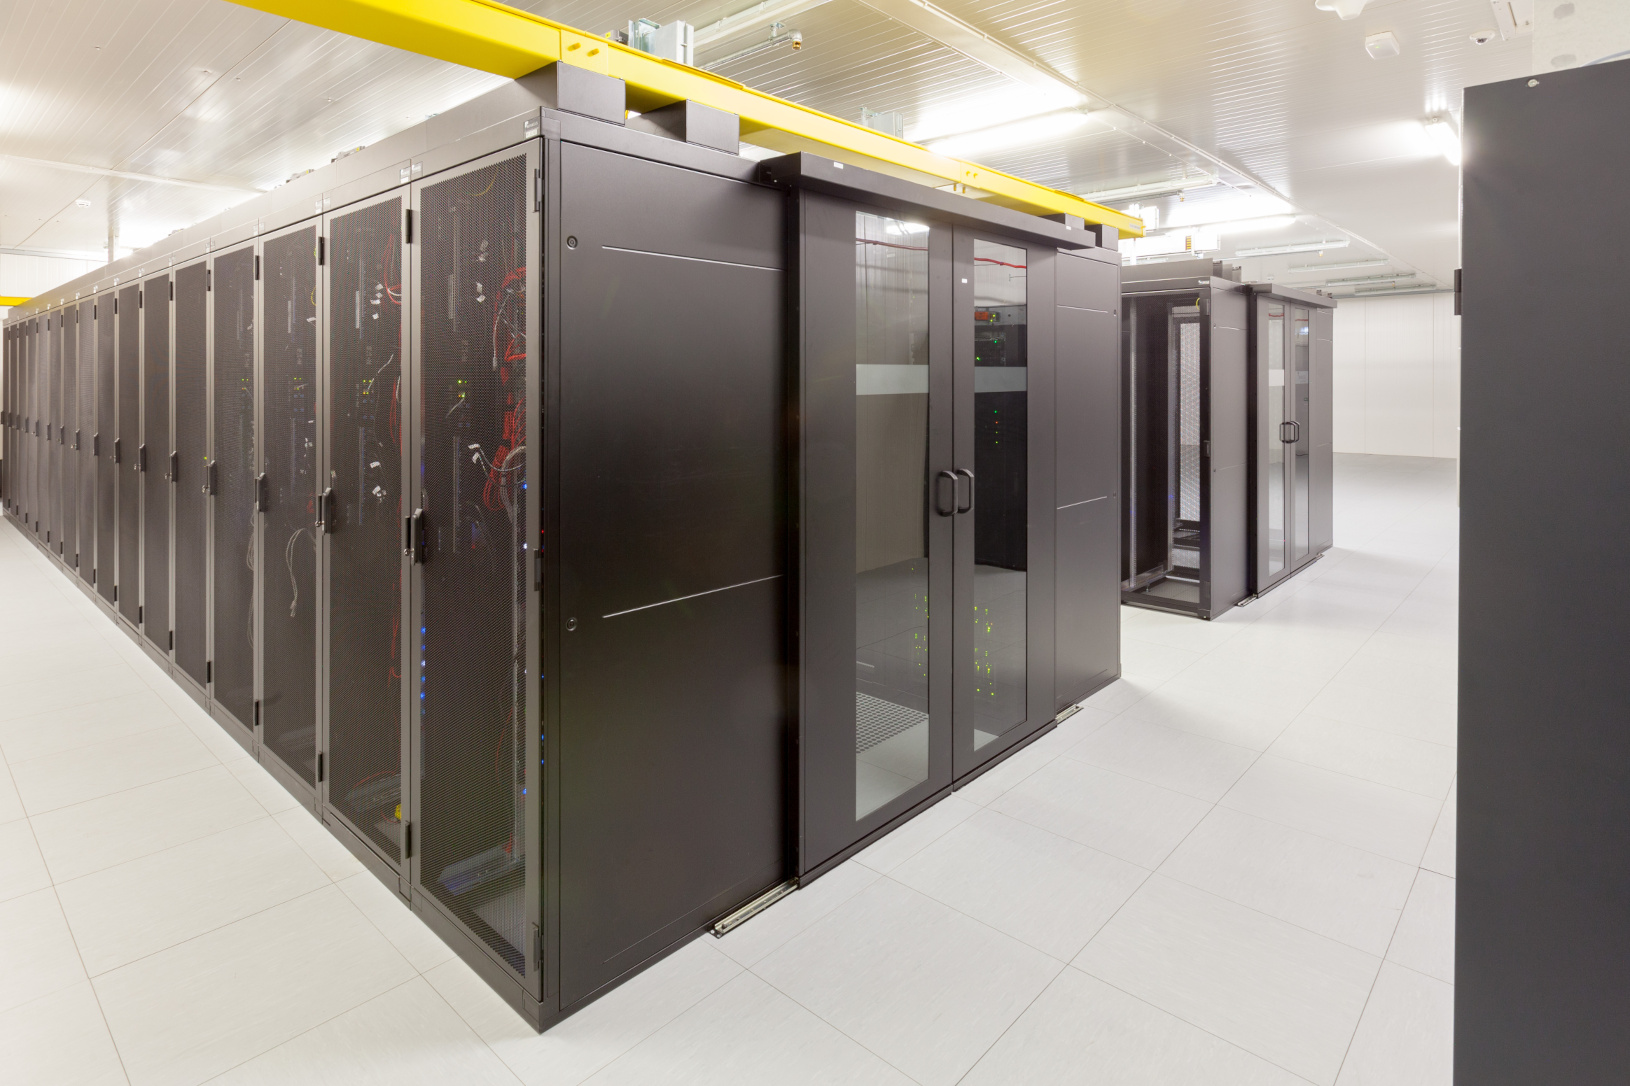 Network servers in a data center. Tier III carrier neutral data